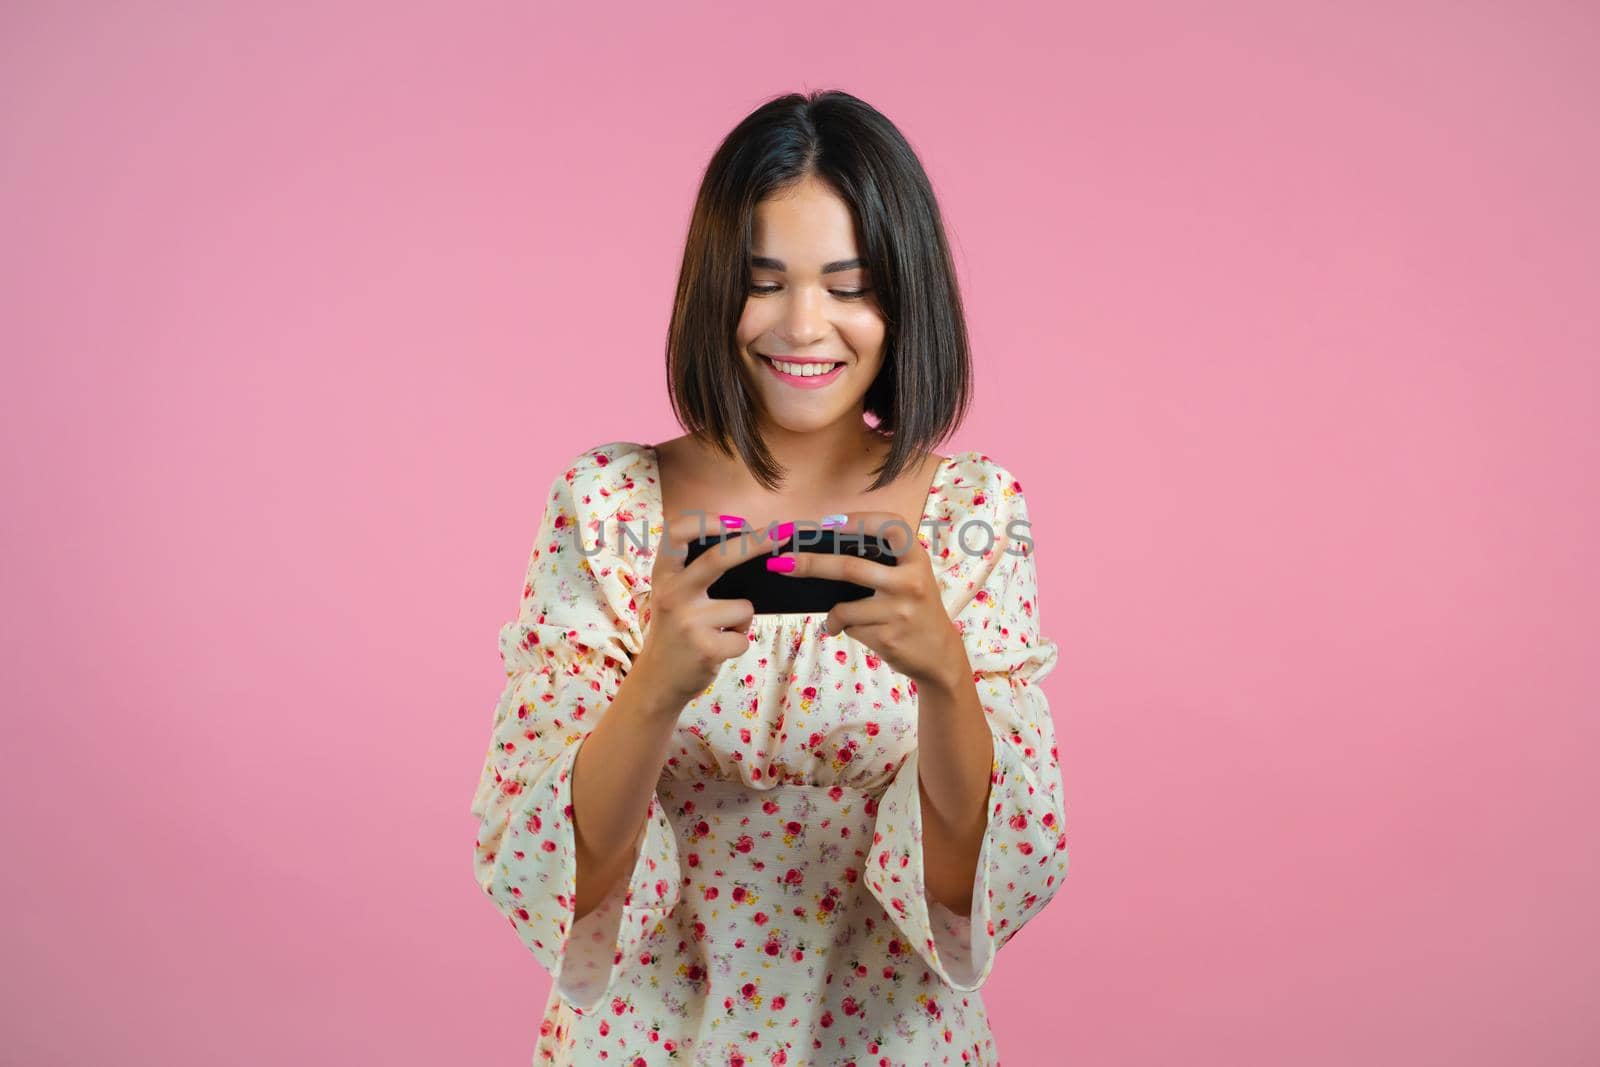 Woman playing game on smartphone on pink studio wall. Using modern technology - apps, social networks. by kristina_kokhanova